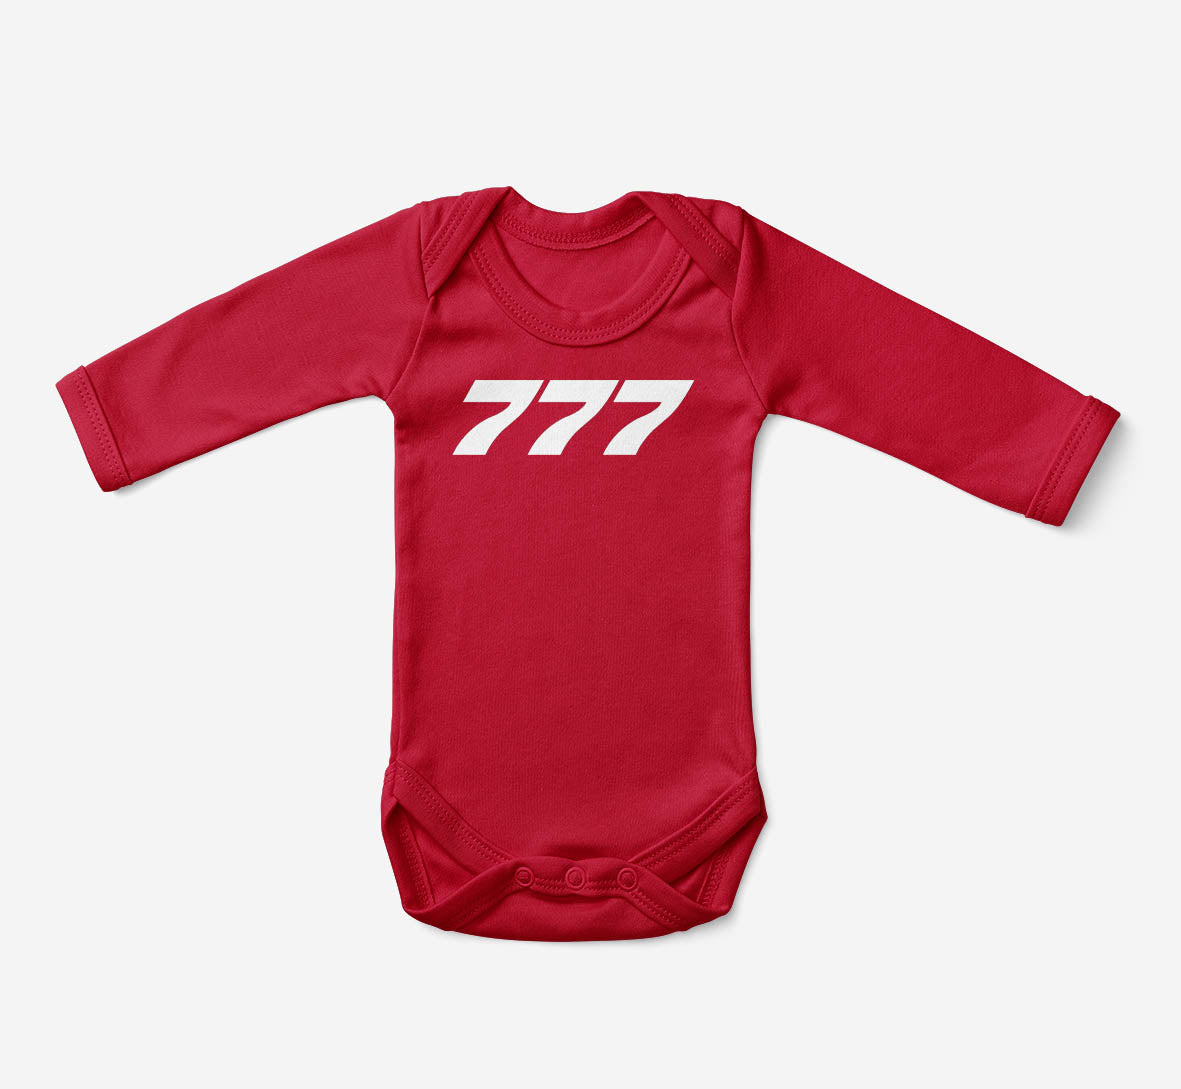 777 Flat Text Designed Baby Bodysuits